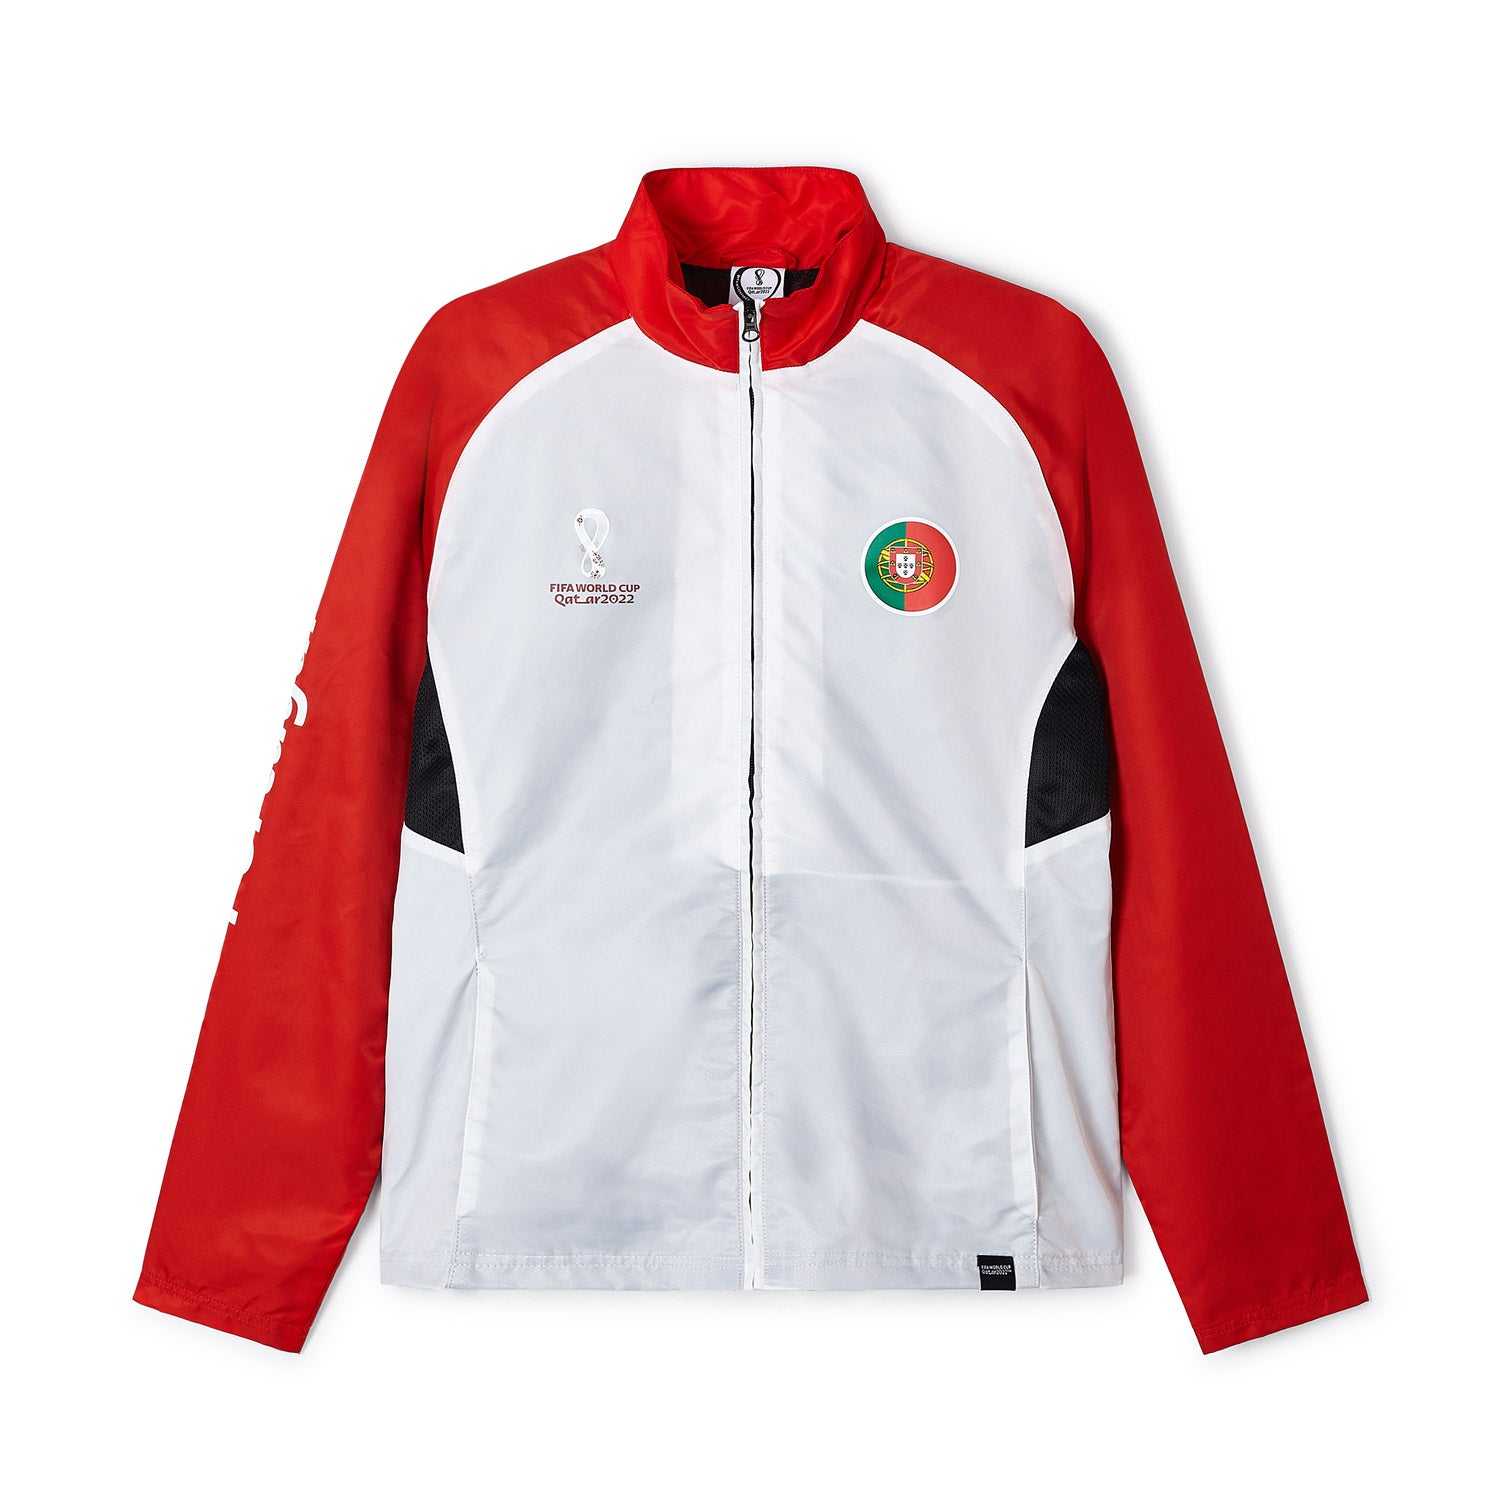 World Cup 2022 Portugal White Raglan Jacket - Mens